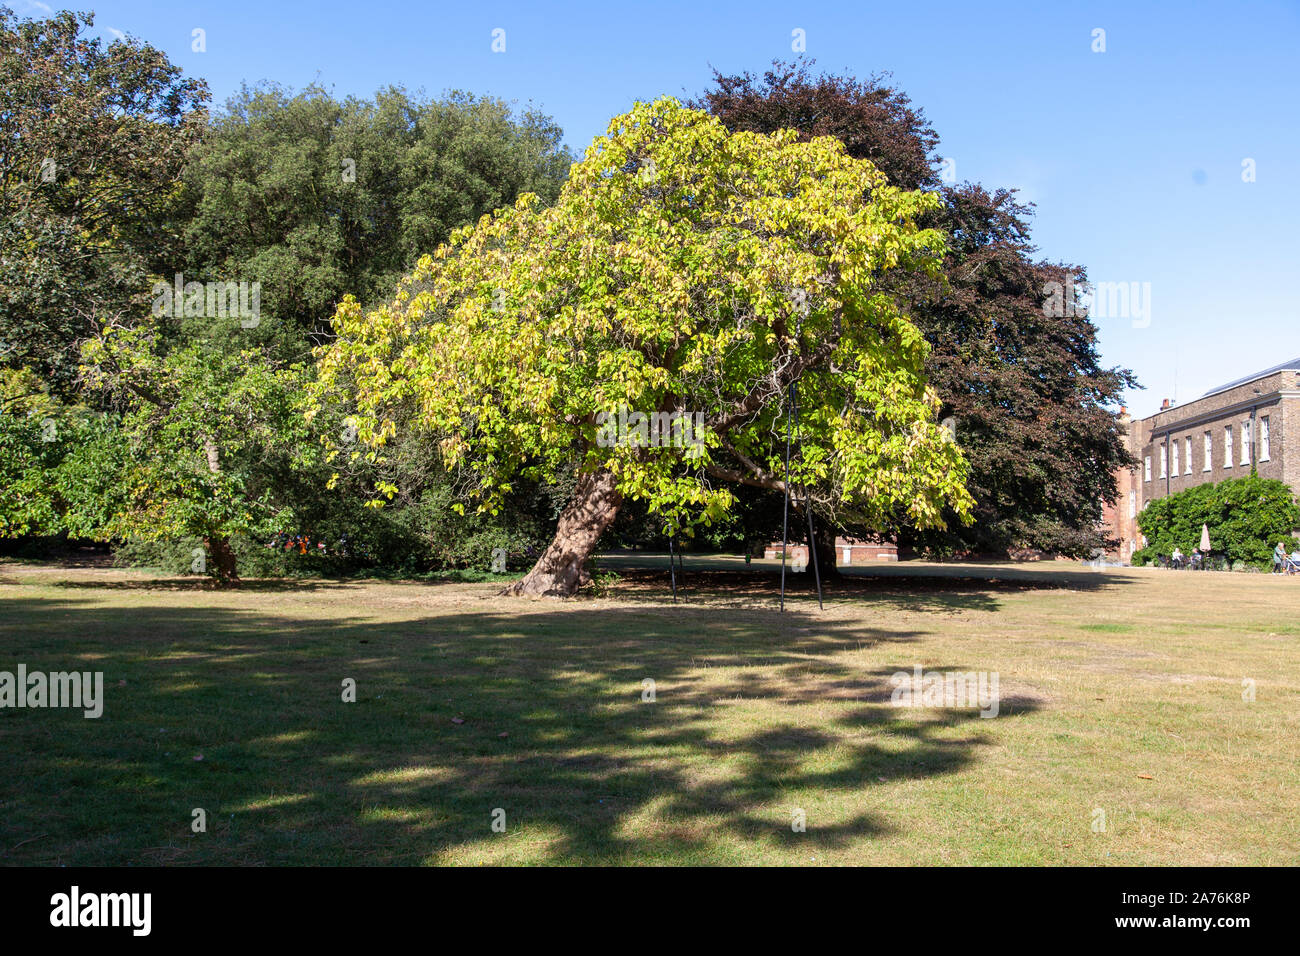 Specimen Indian Bean tree (Catalpa bignonioides), Fulham Palace Gardens, London SW6, UK Stock Photo